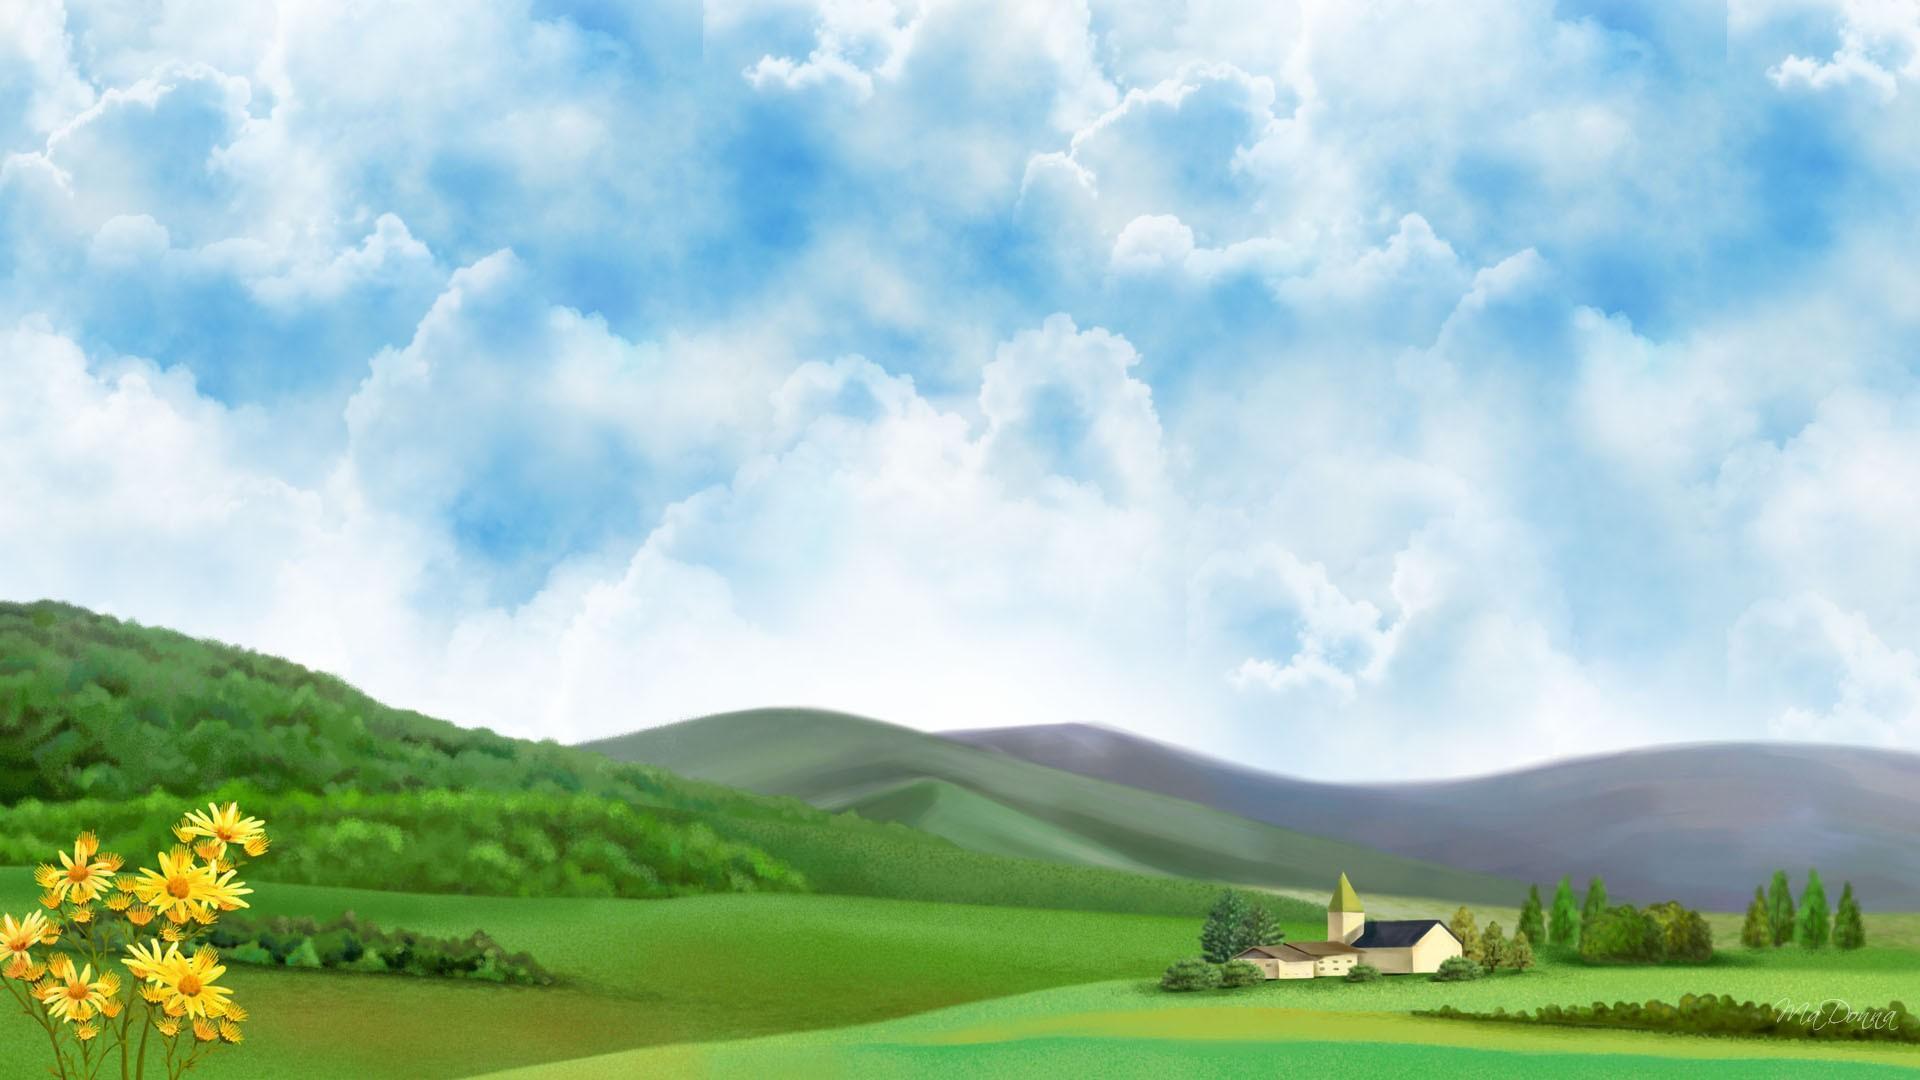 Farm Country HD desktop wallpaper, Widescreen, High Definition